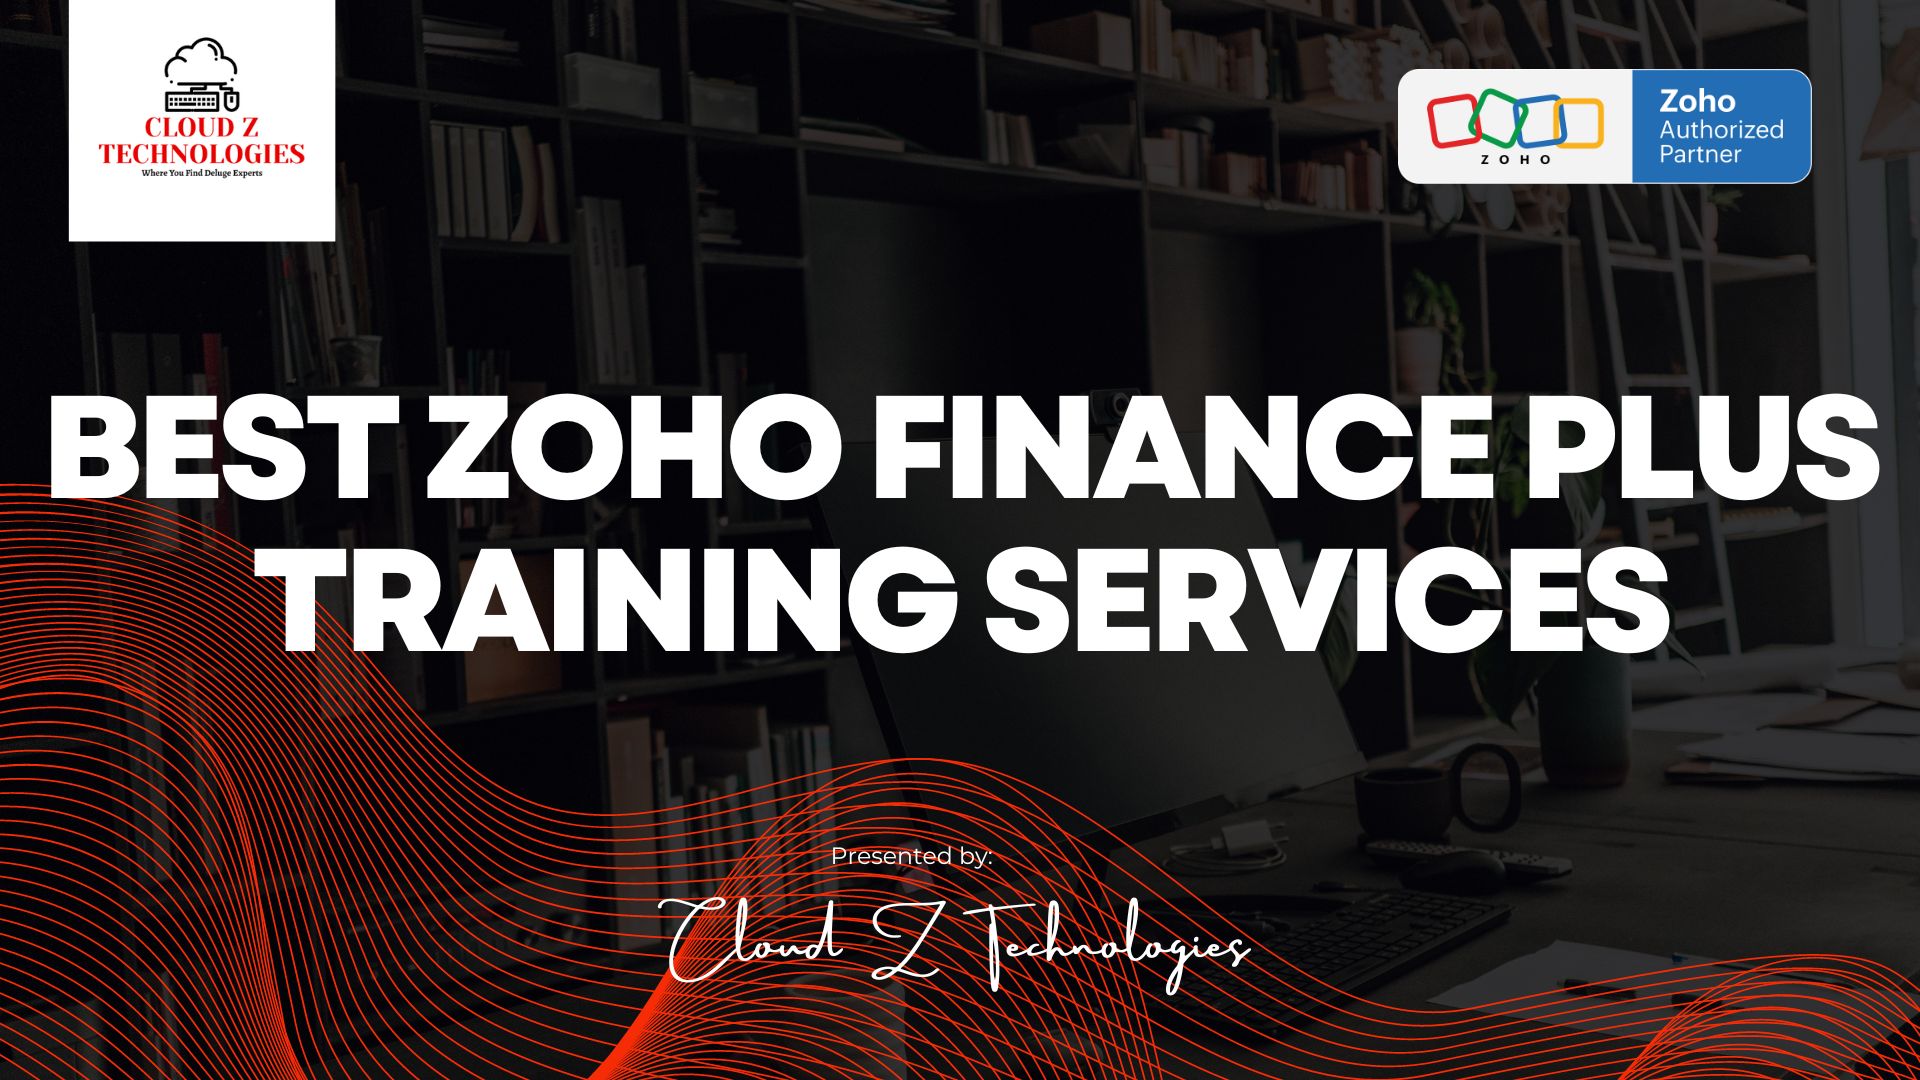 Zoho Finance Plus Training Services